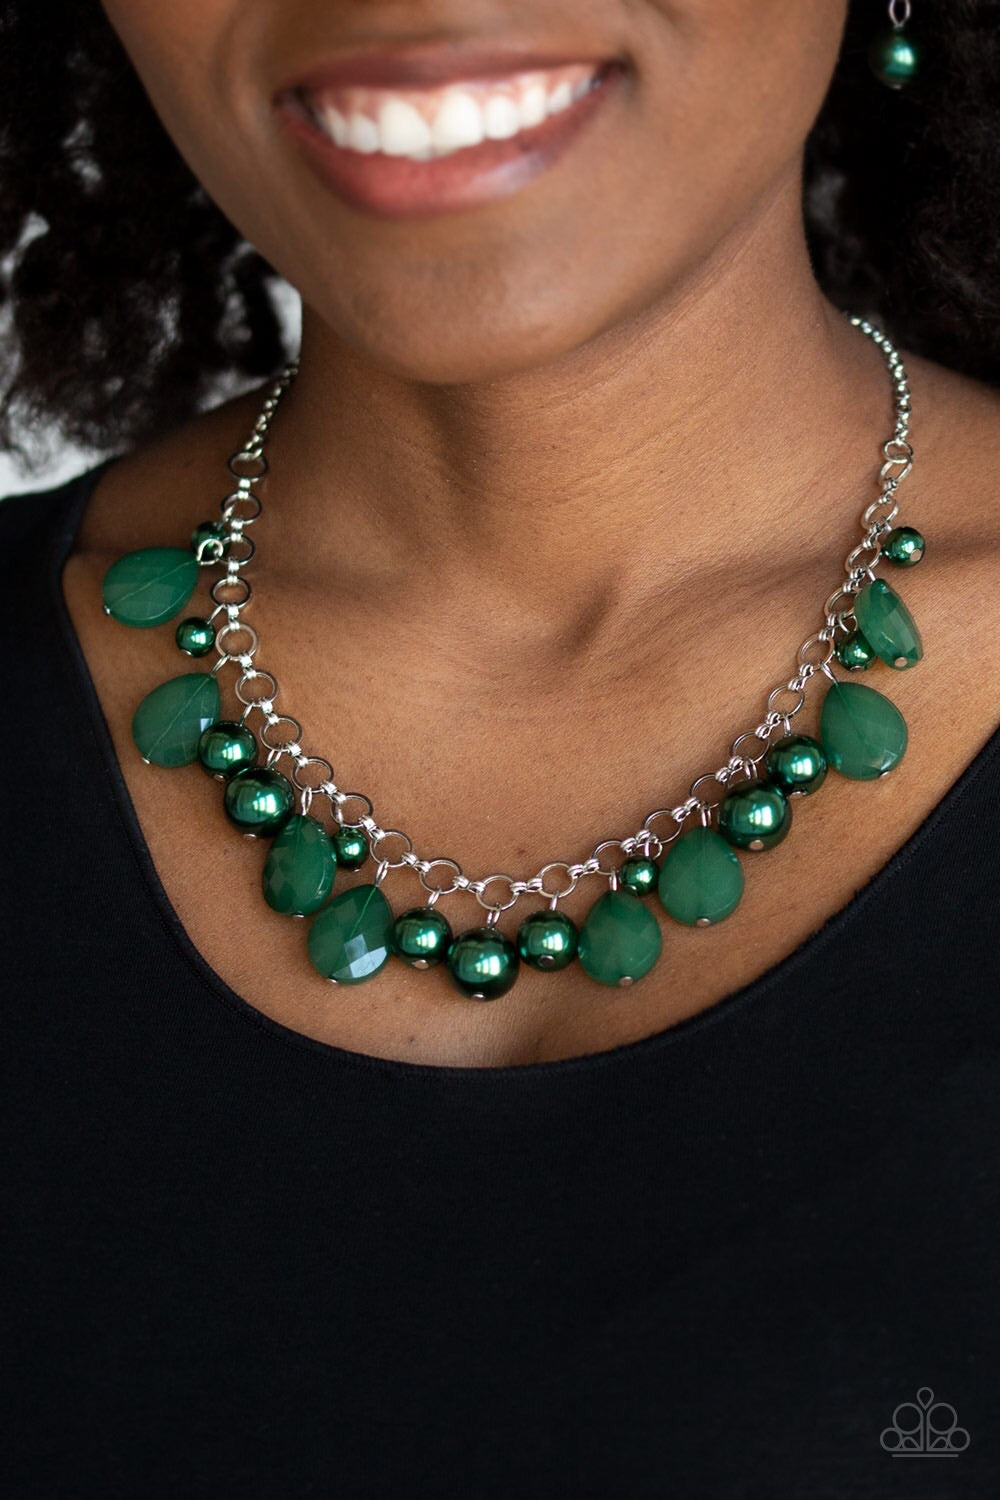 Paparazzi Jewelry Necklace Pacific Posh - Green